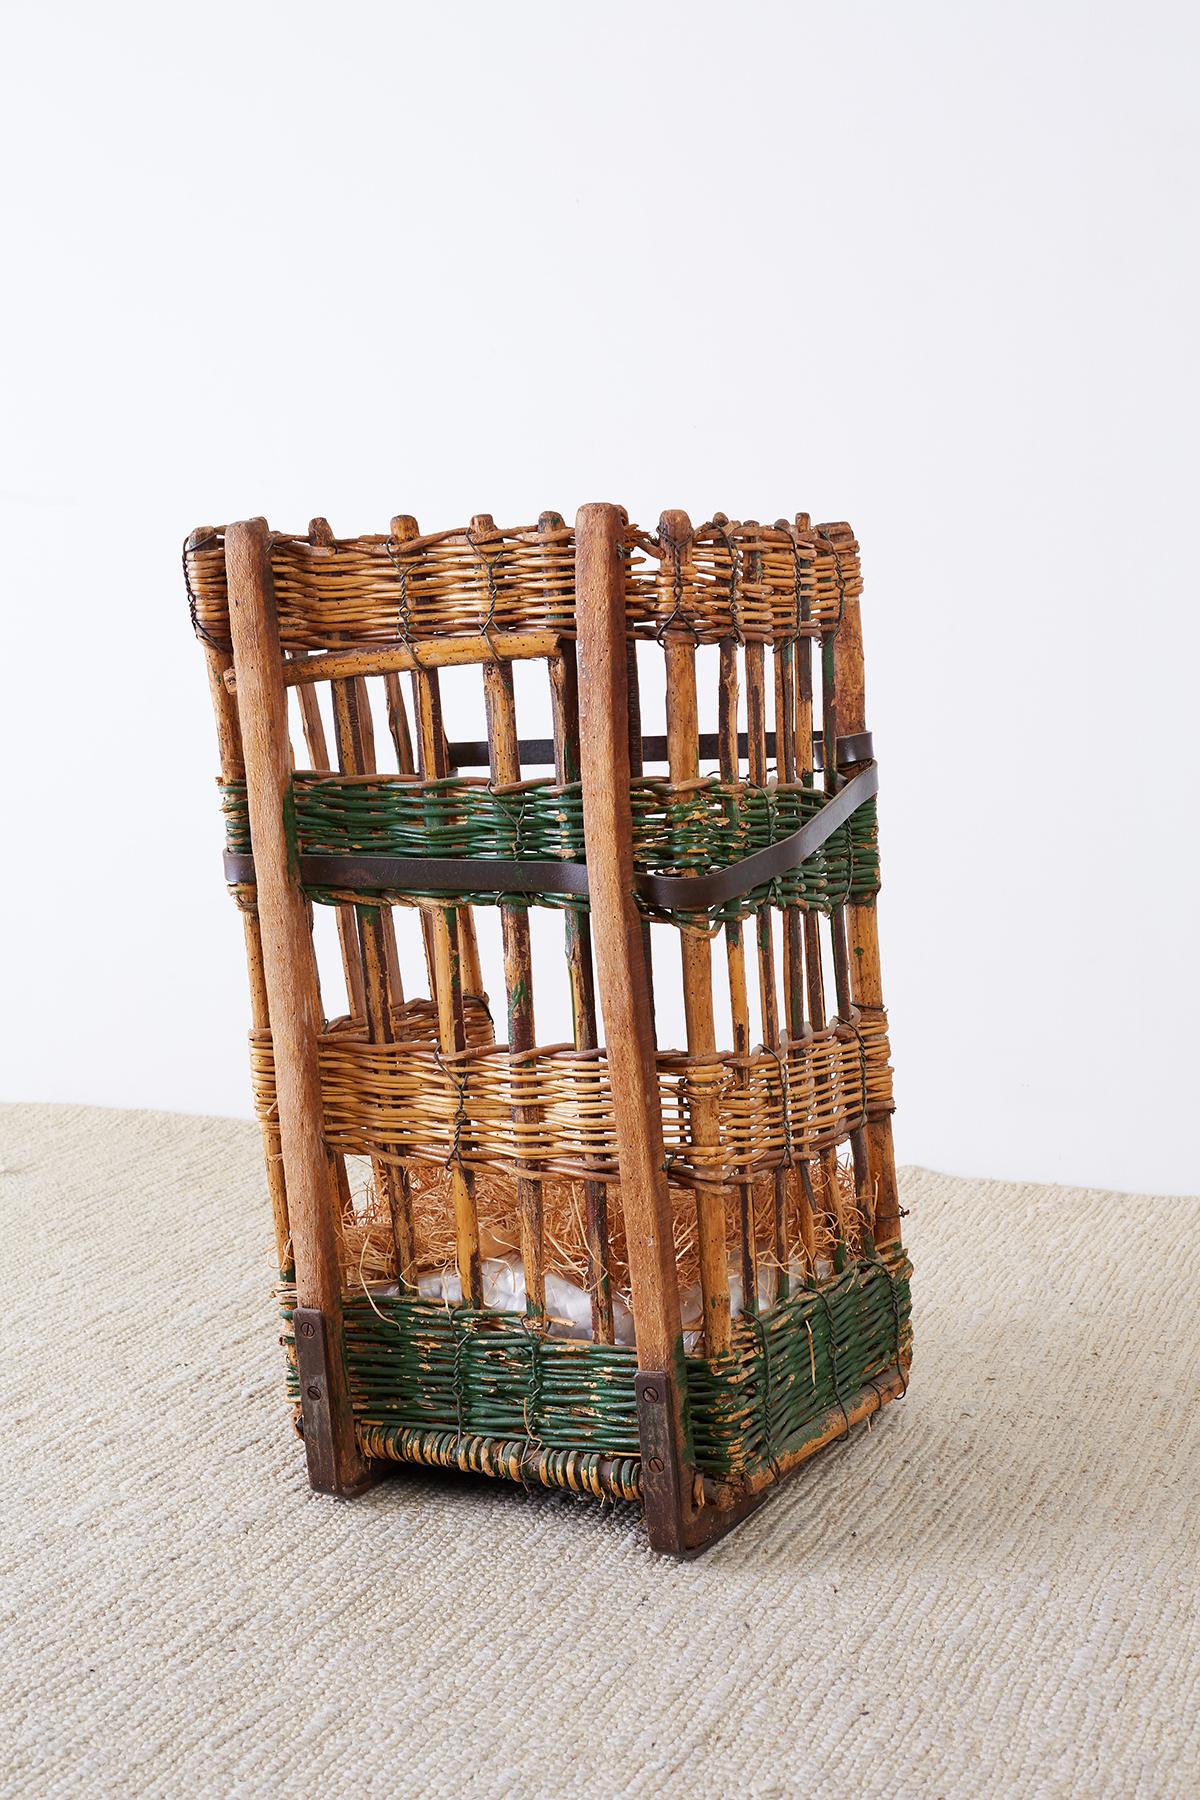 19th Century French Wicker Harvest Display Basket 8